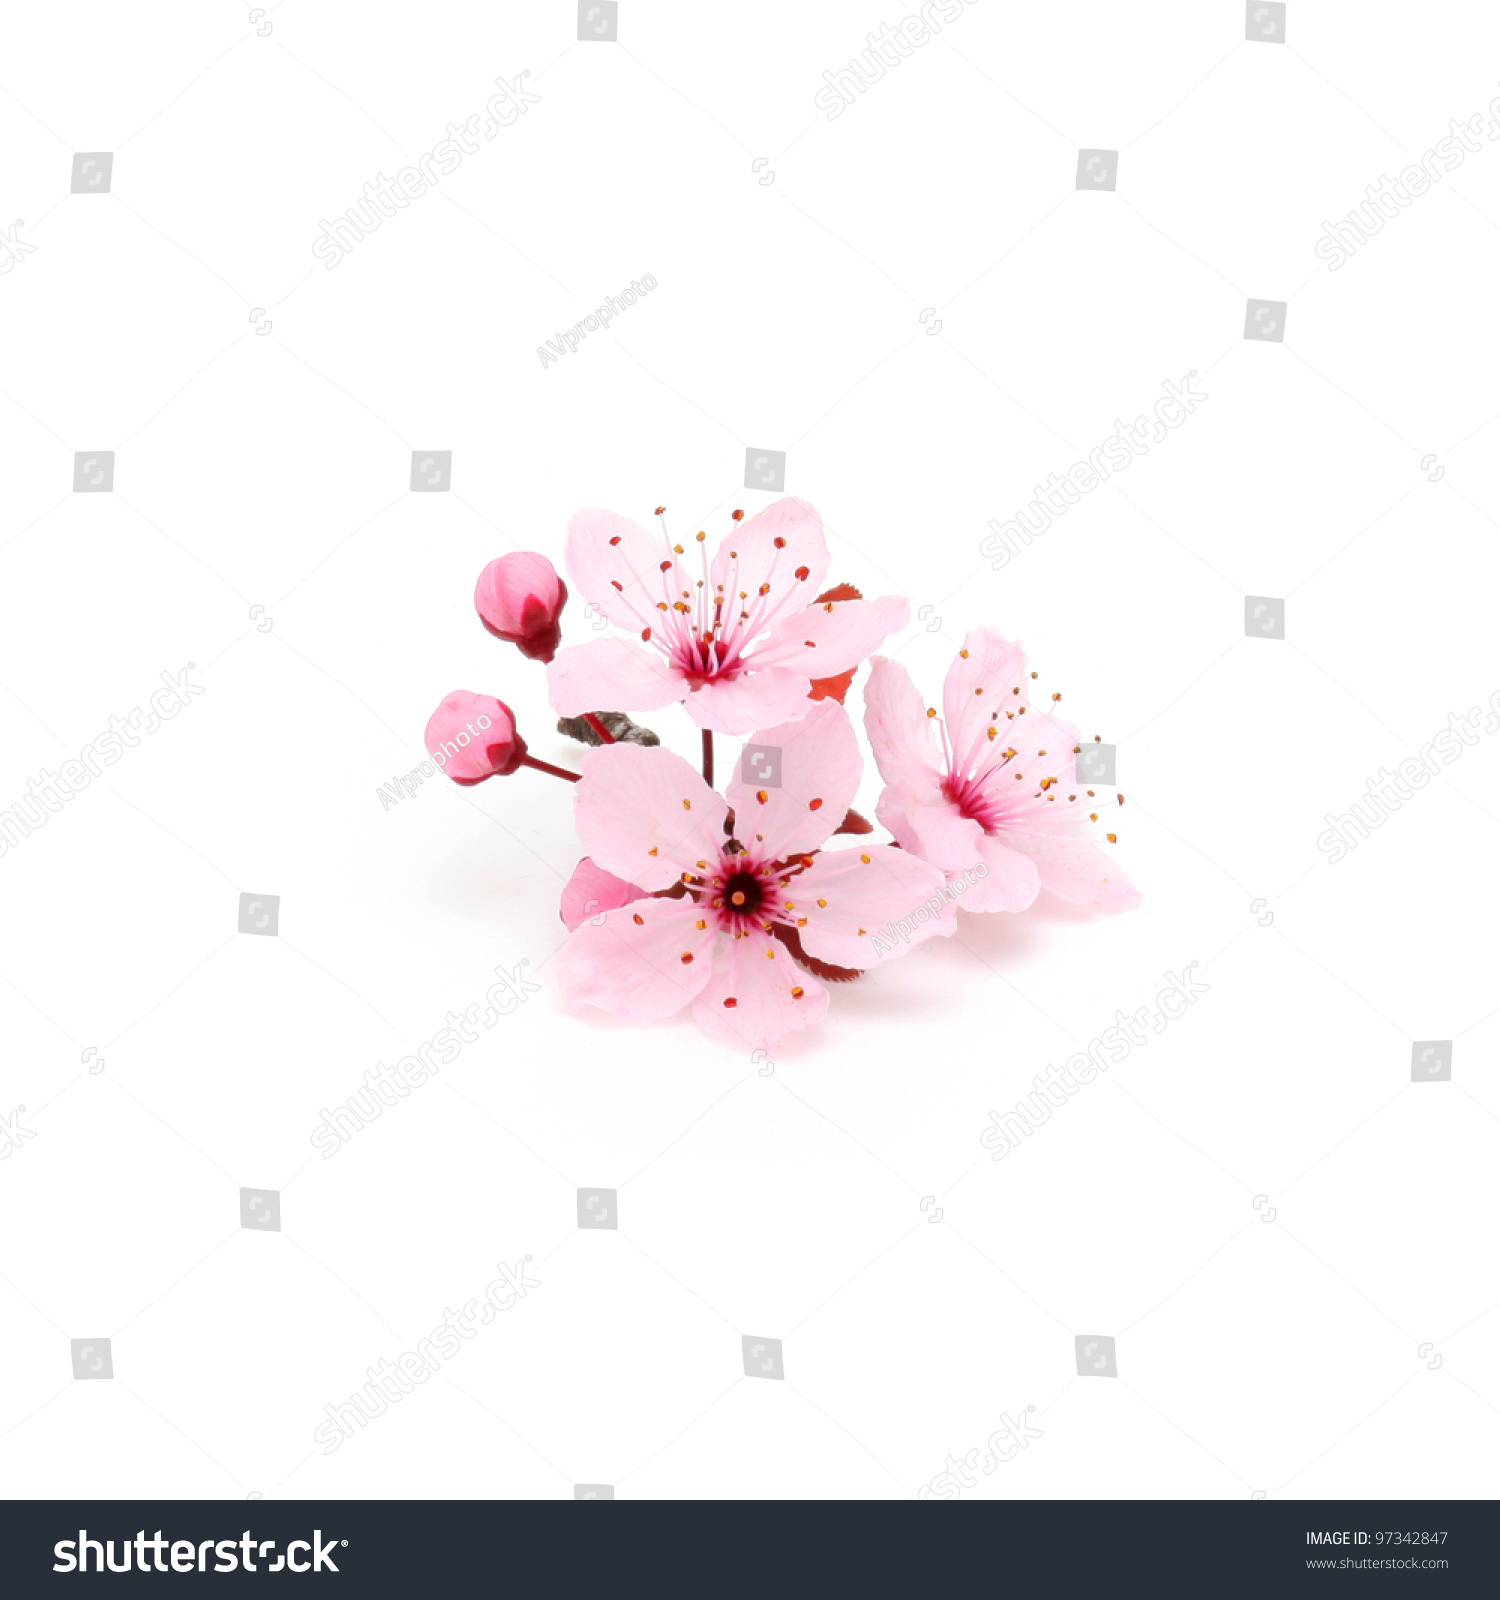 Cherry blossom, sakura flowers isolated on white background #97342847